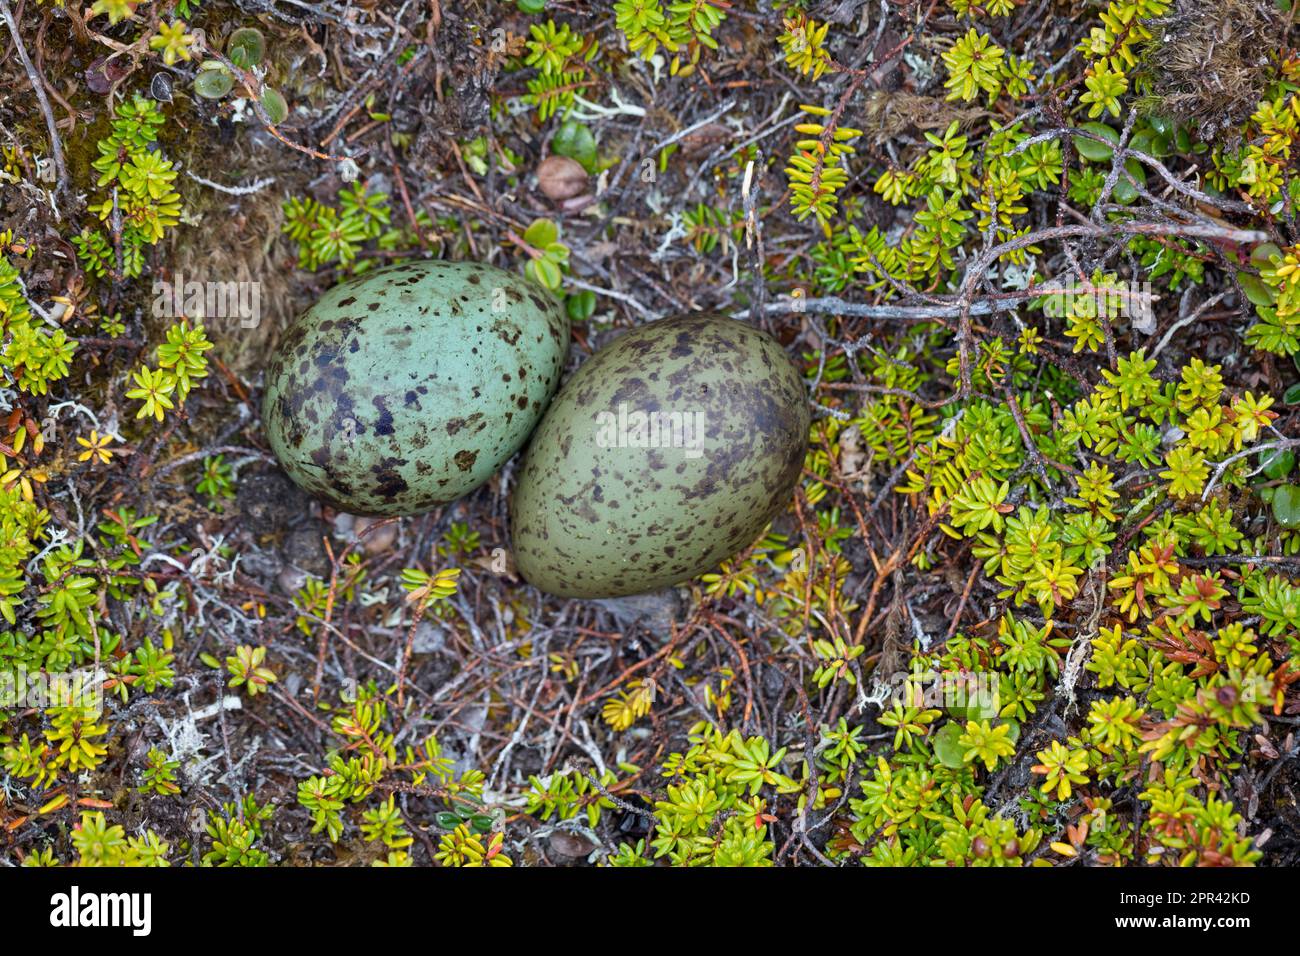 skua a coda lunga (Stercorarius longicaudus), uova a terra tra alofiti, vista dall'alto, Scandinavia Foto Stock